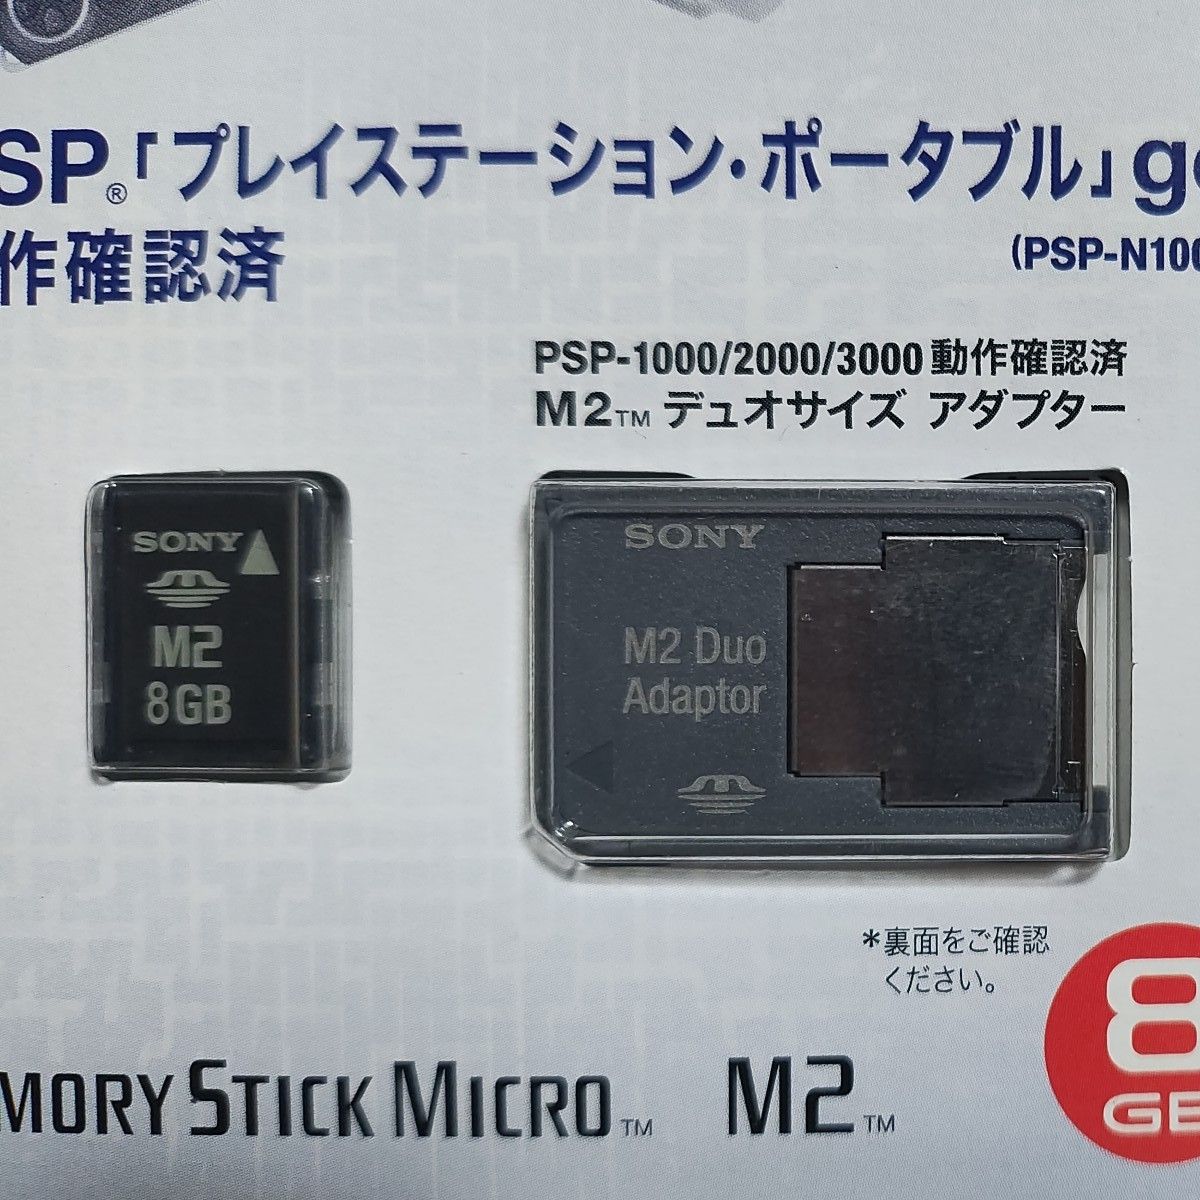 SONY純正 MEMORY STICK MICRO M2 8GB 新品